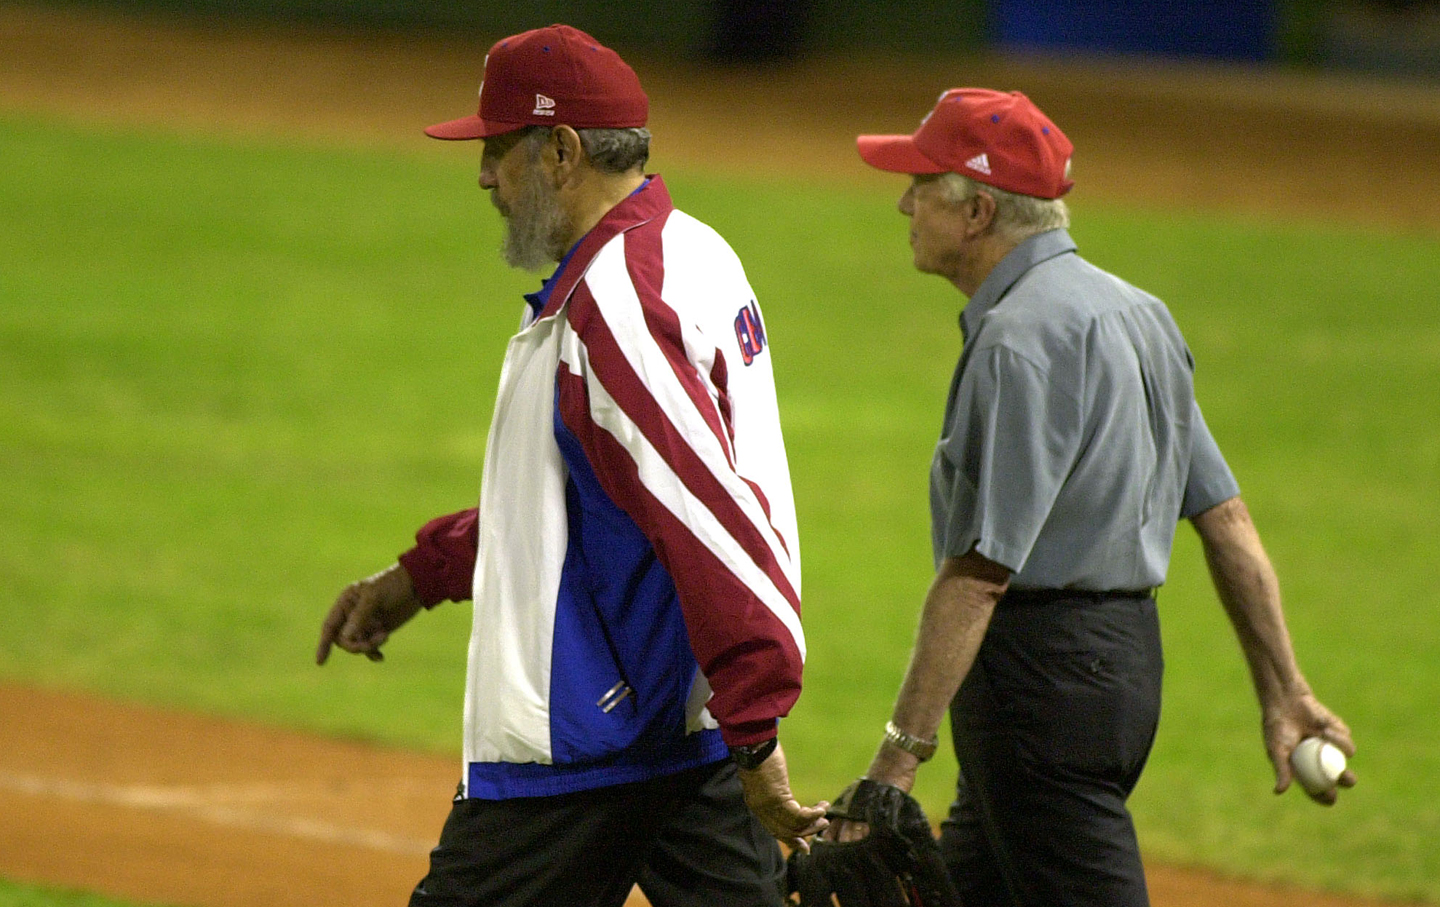 Cuban National Team visit shows U.S. baseball relations still